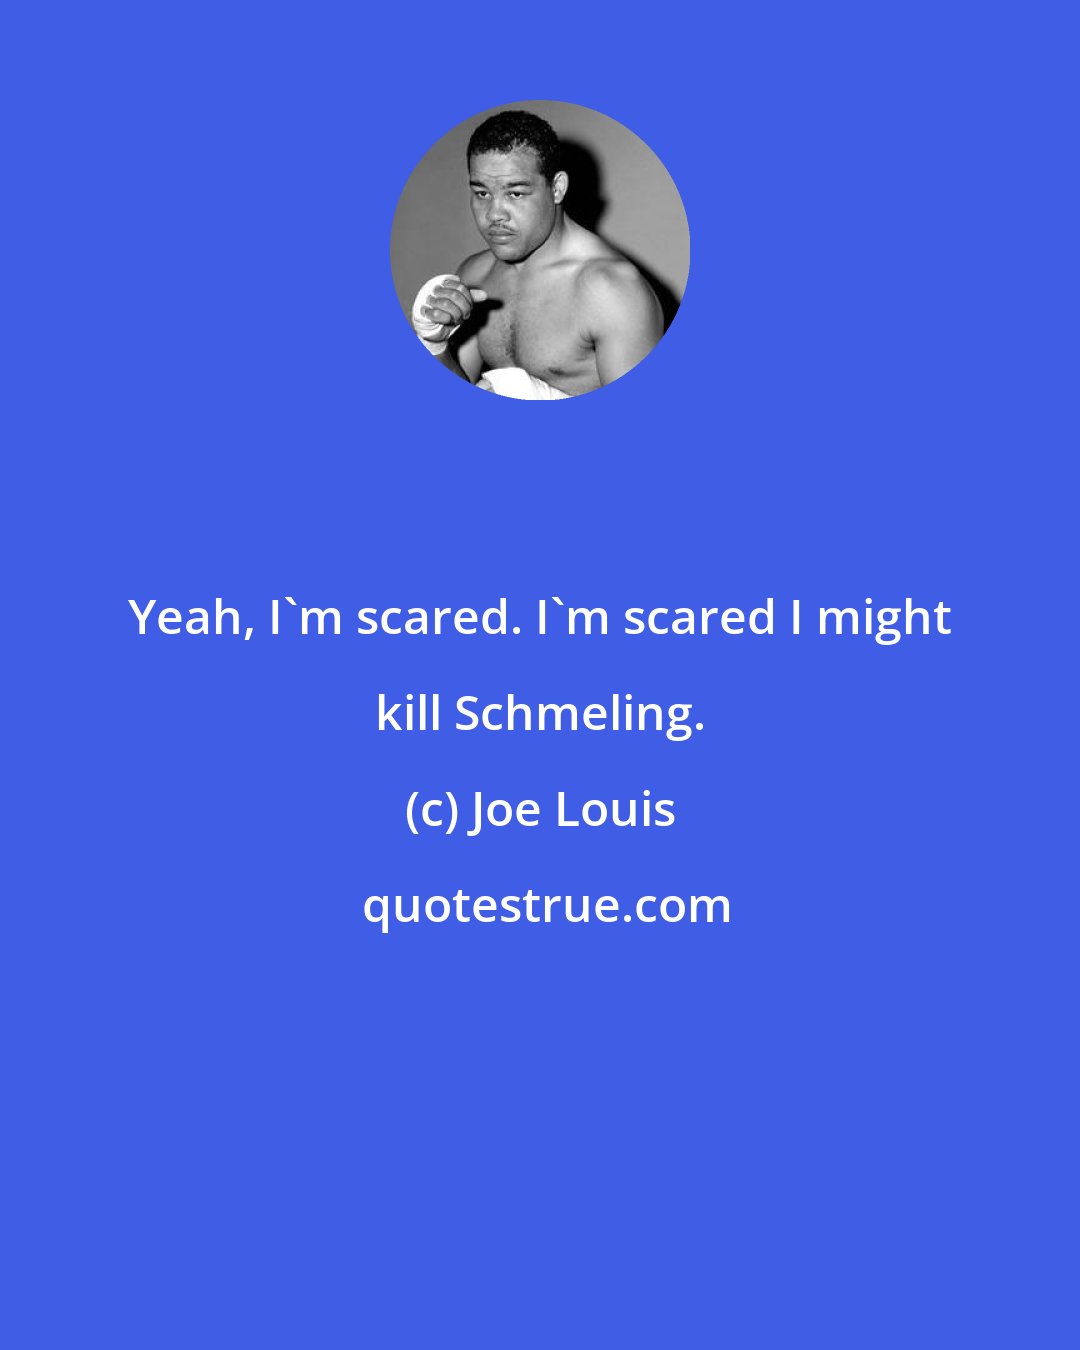 Joe Louis: Yeah, I'm scared. I'm scared I might kill Schmeling.